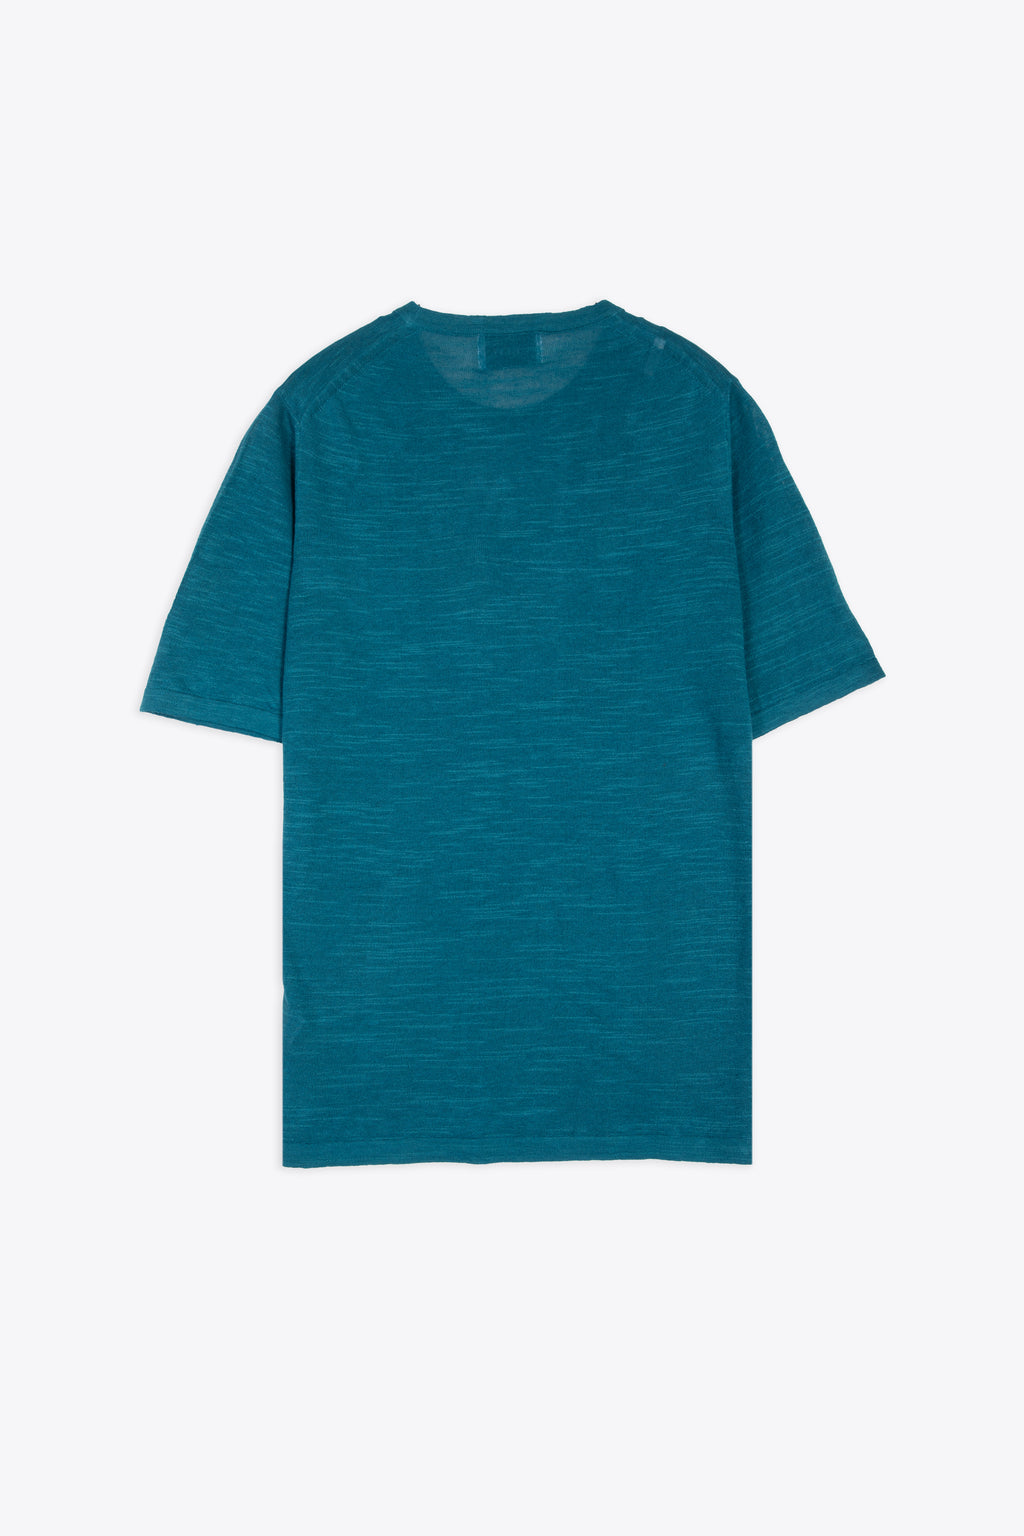 alt-image__Teal-blue-linen-blend-t-shirt